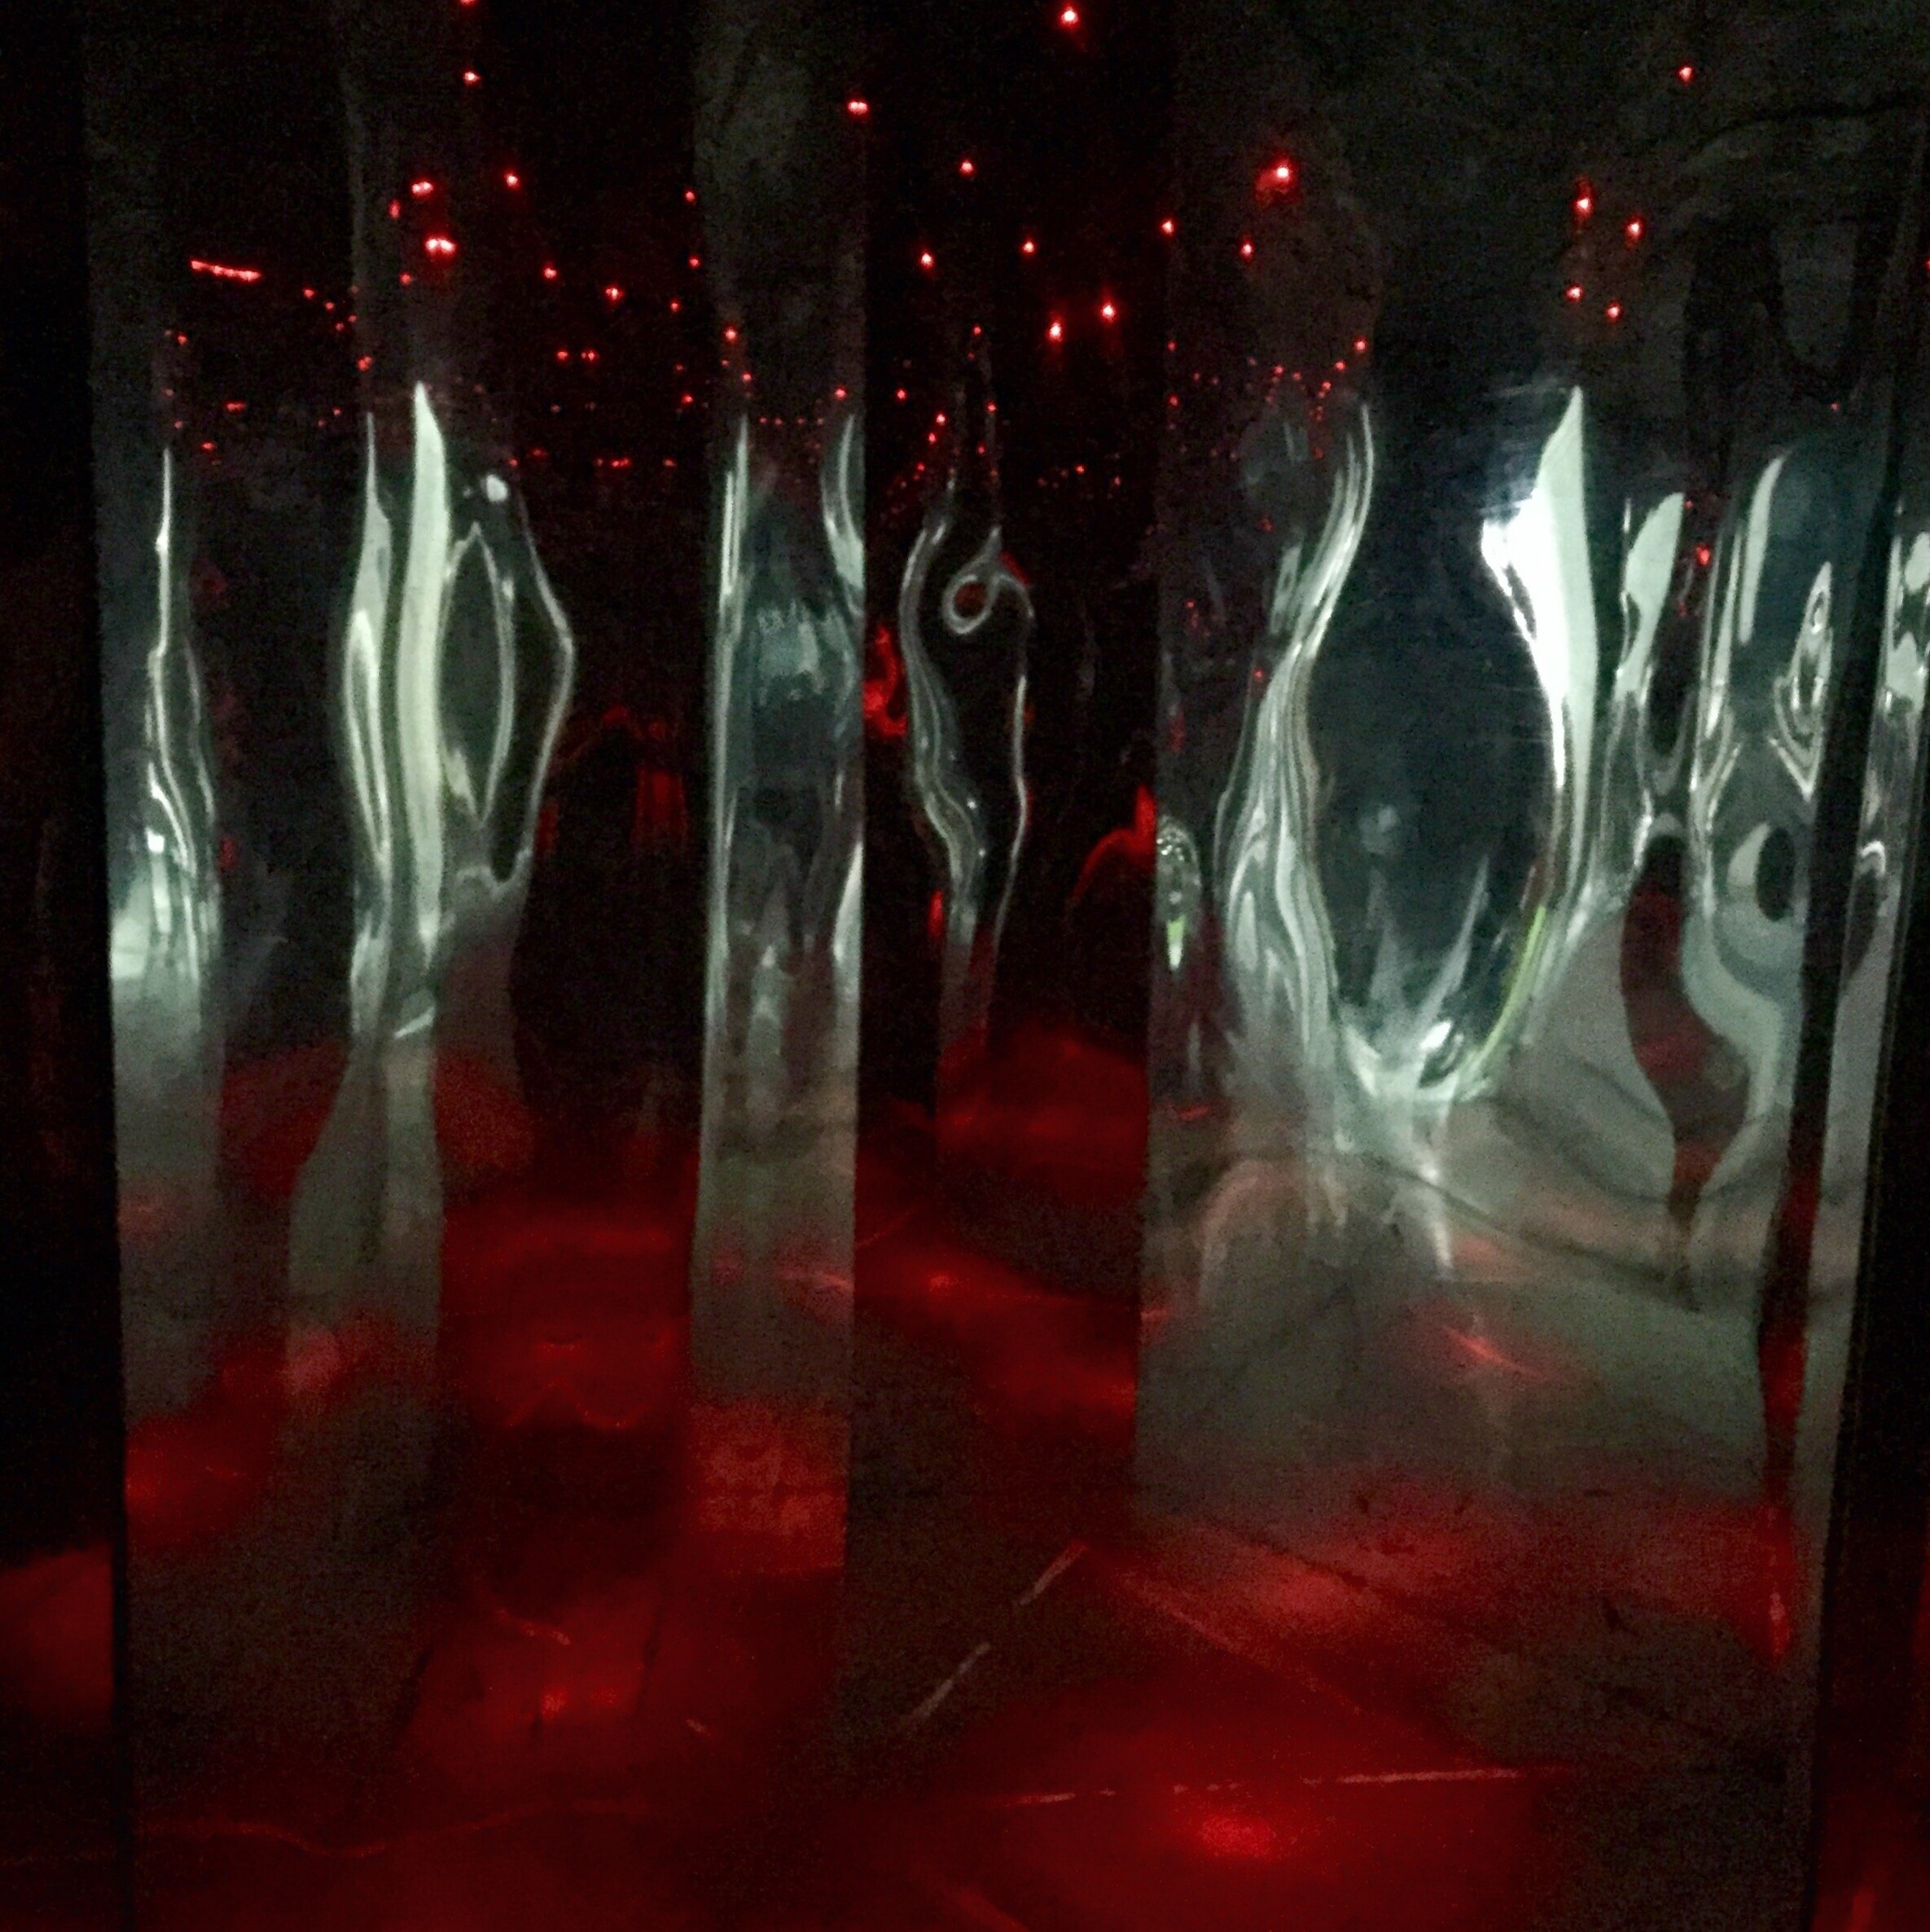 Inside the darkened labyrinth of the Experimentarium.